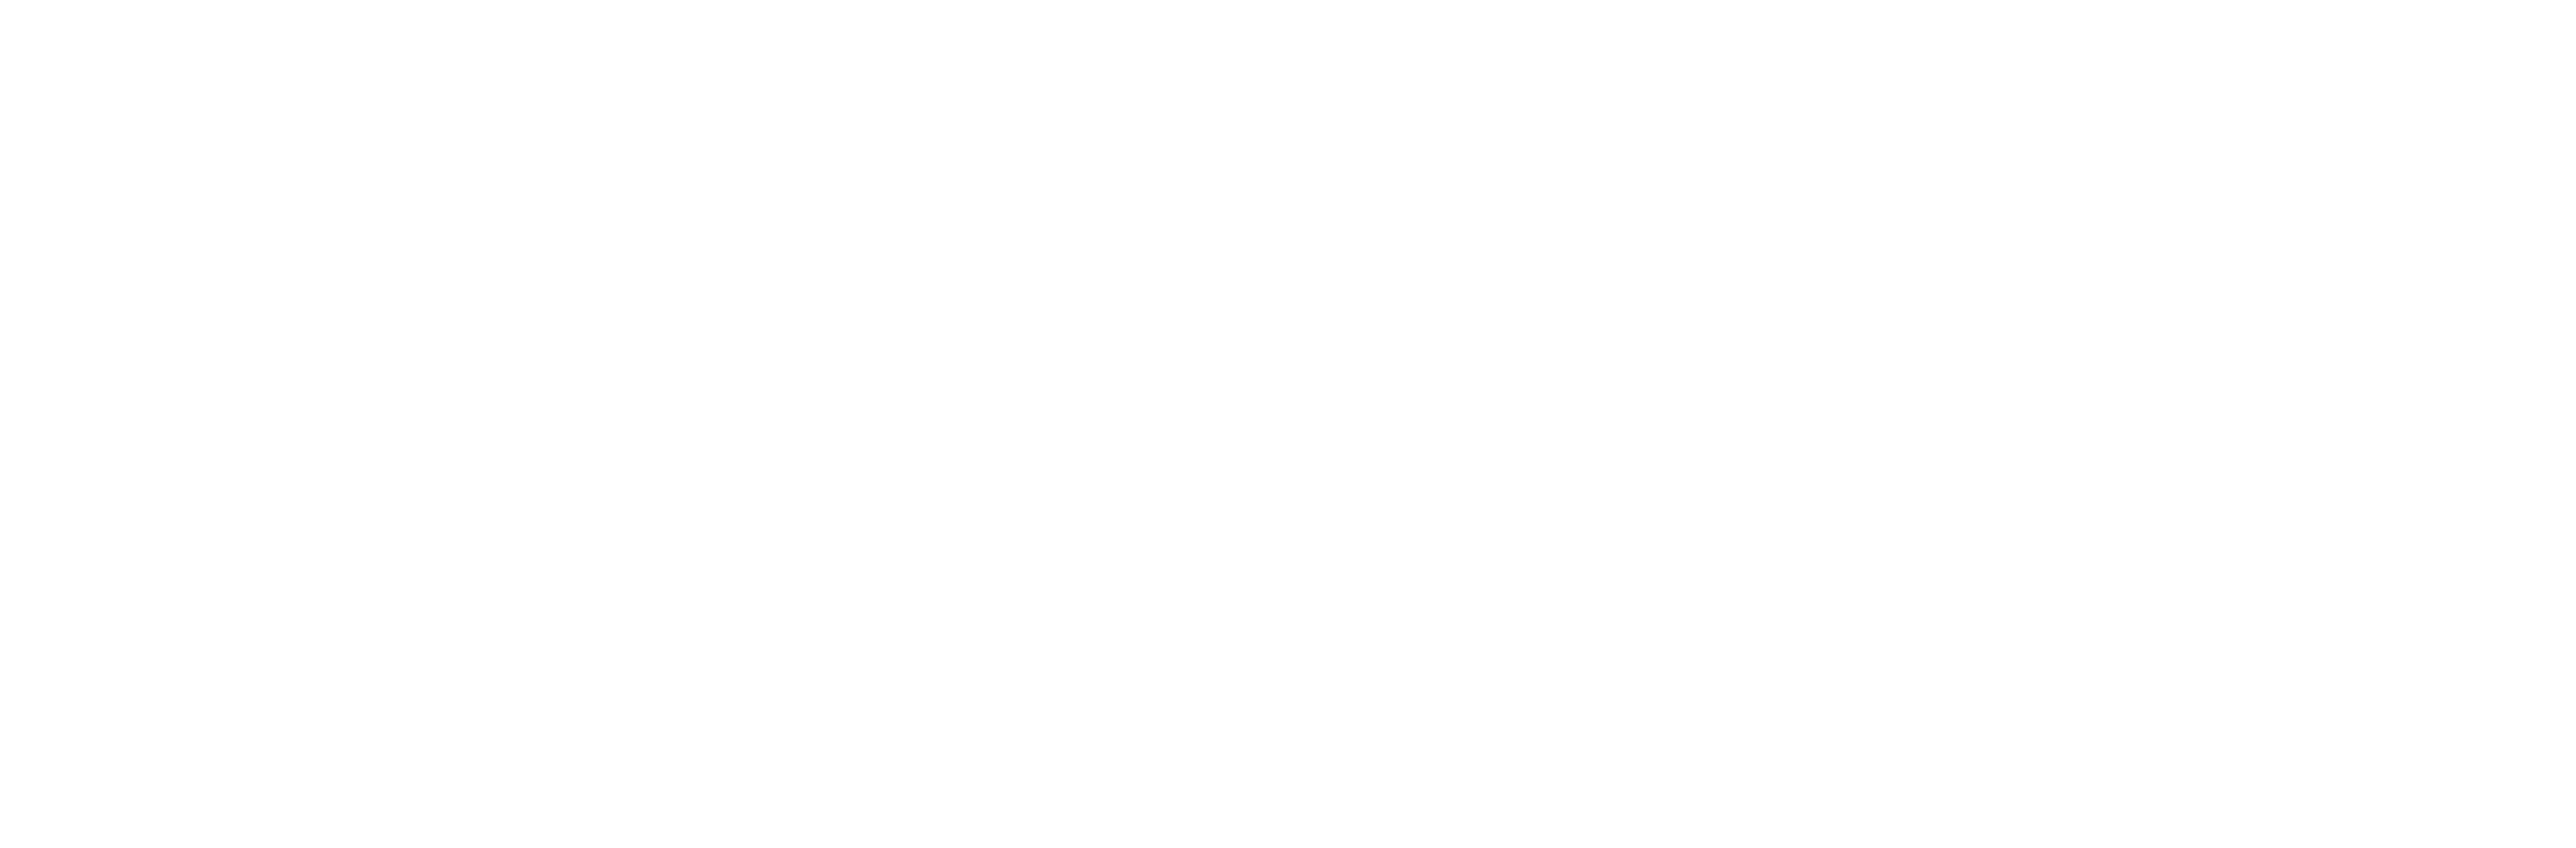 google white logo - Google Logo